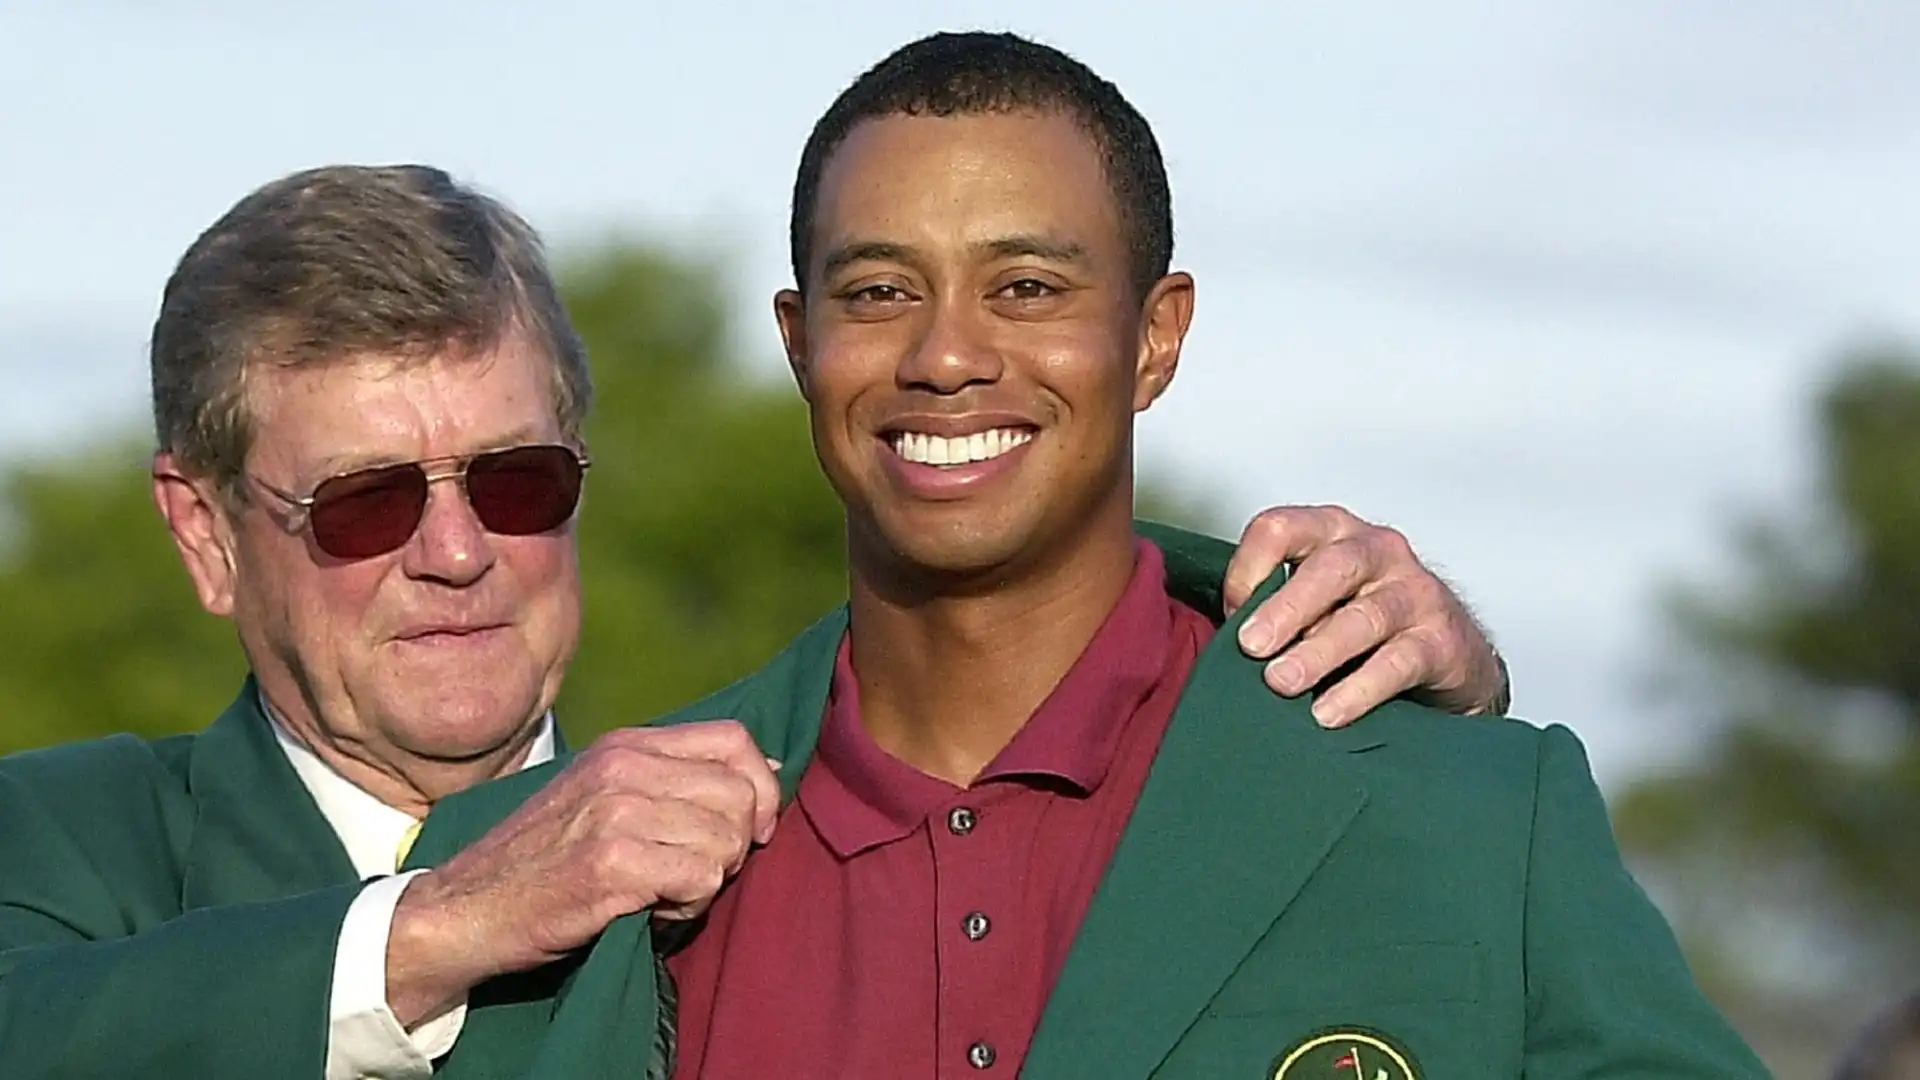 2002: Tiger Woods (Golf), guadagni totali stimati 69 milioni di dollari